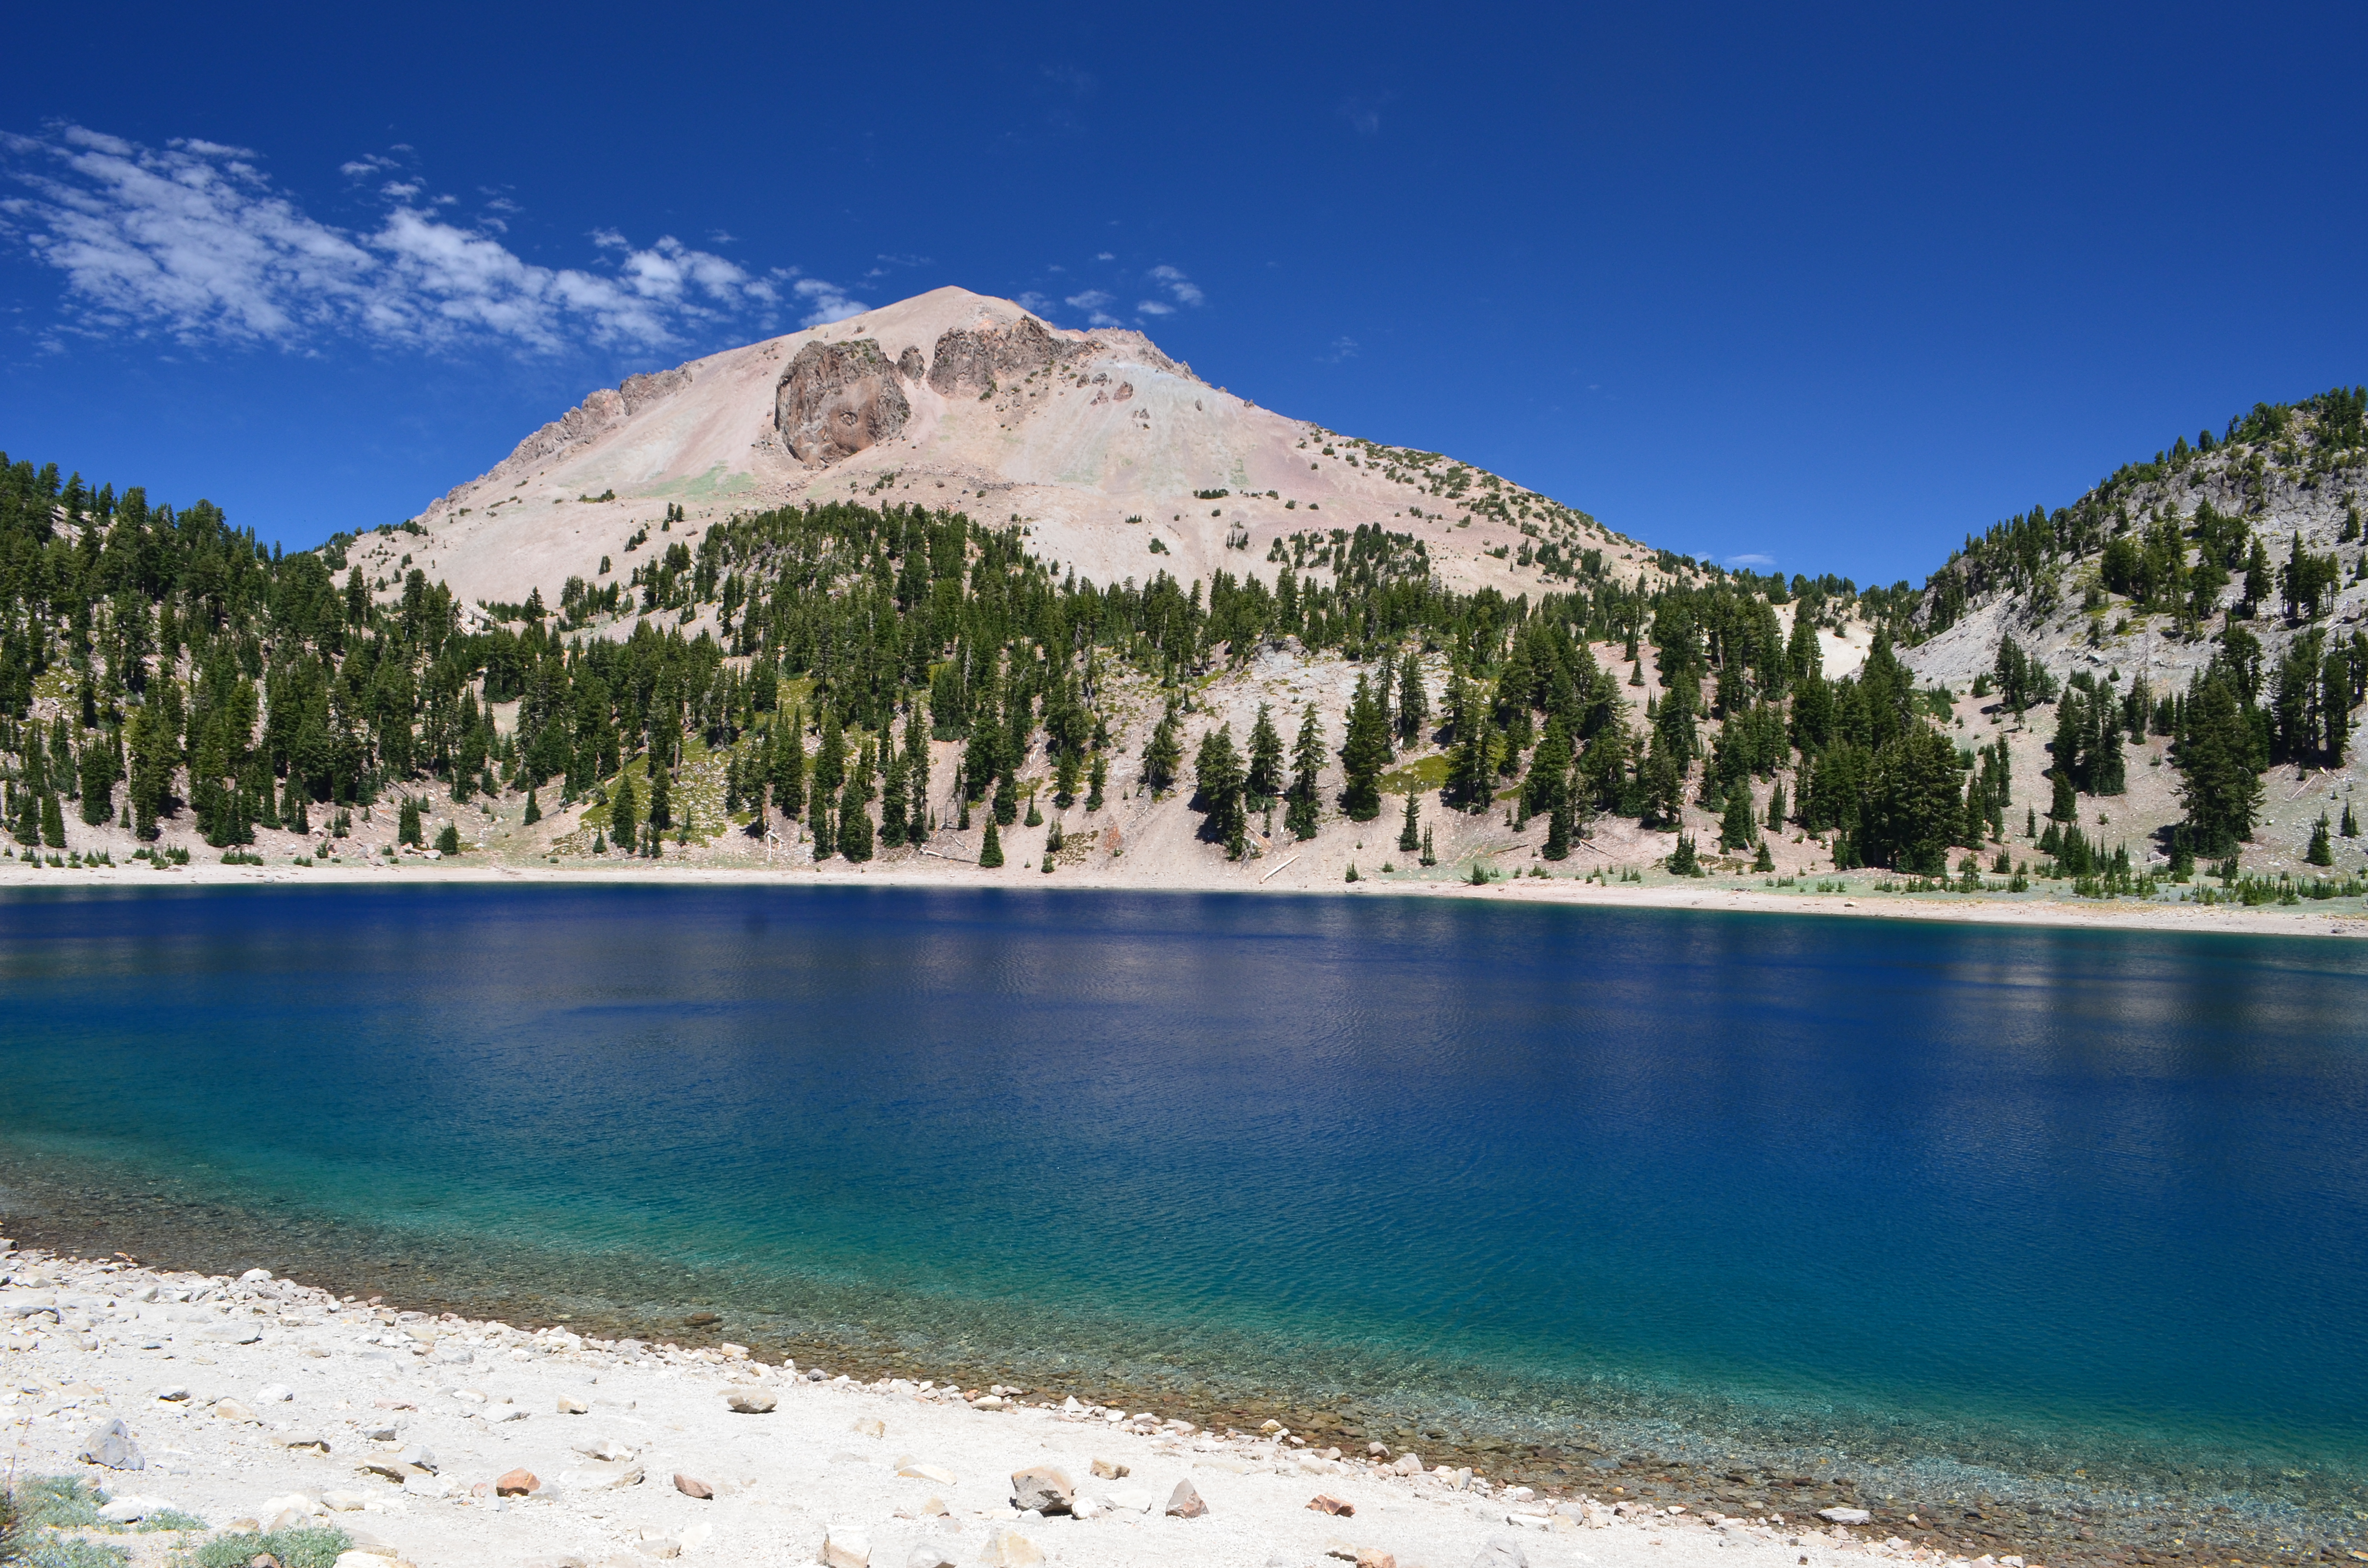 A volcanic peak rises above a tree-lined, deep blue lake.